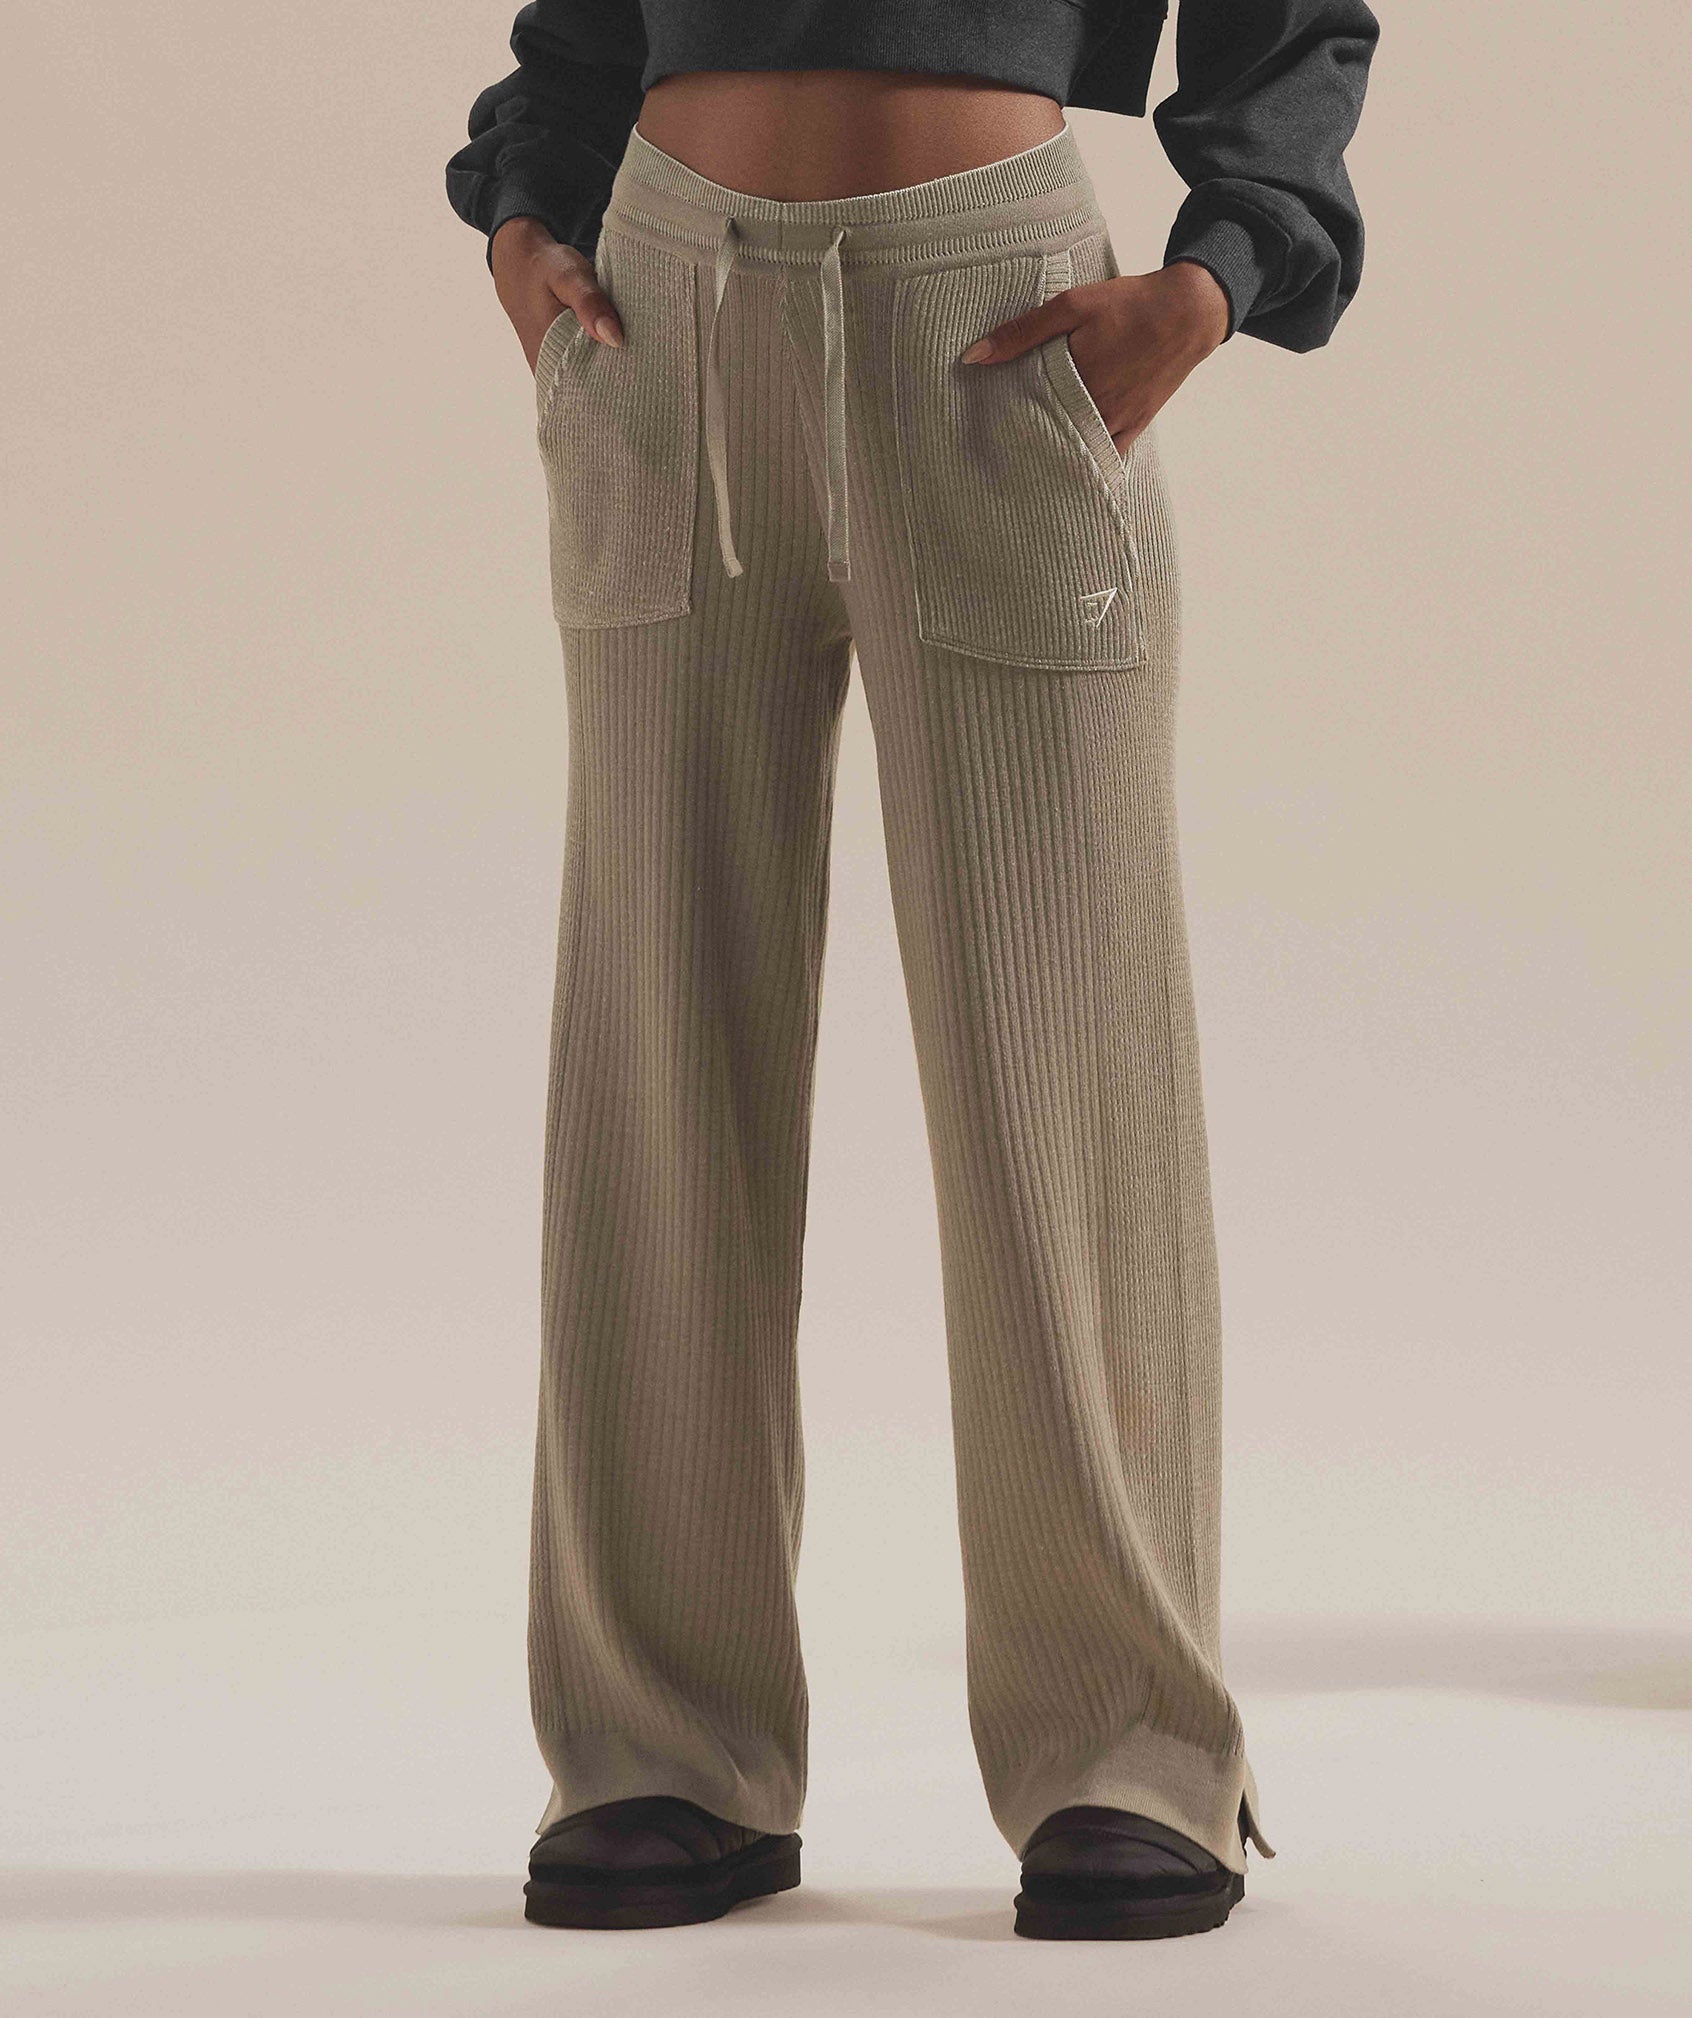 Gymshark Pause Knitwear Pants - Cement Brown/Pebble Grey